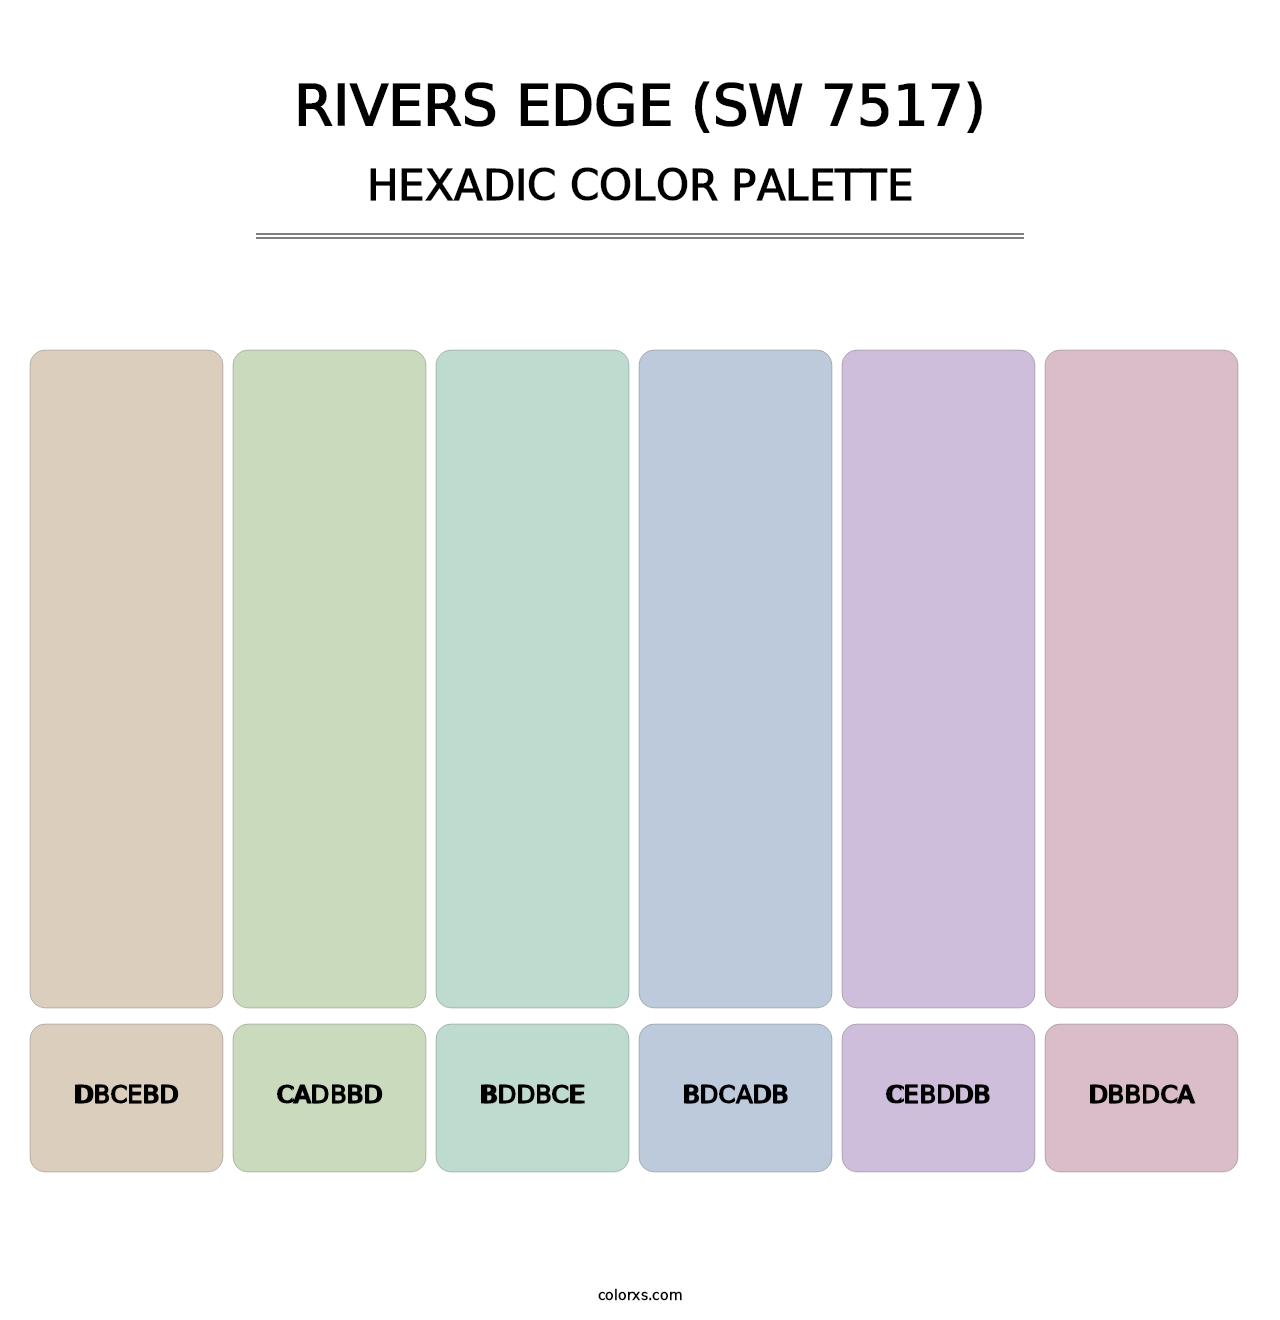 Rivers Edge (SW 7517) - Hexadic Color Palette